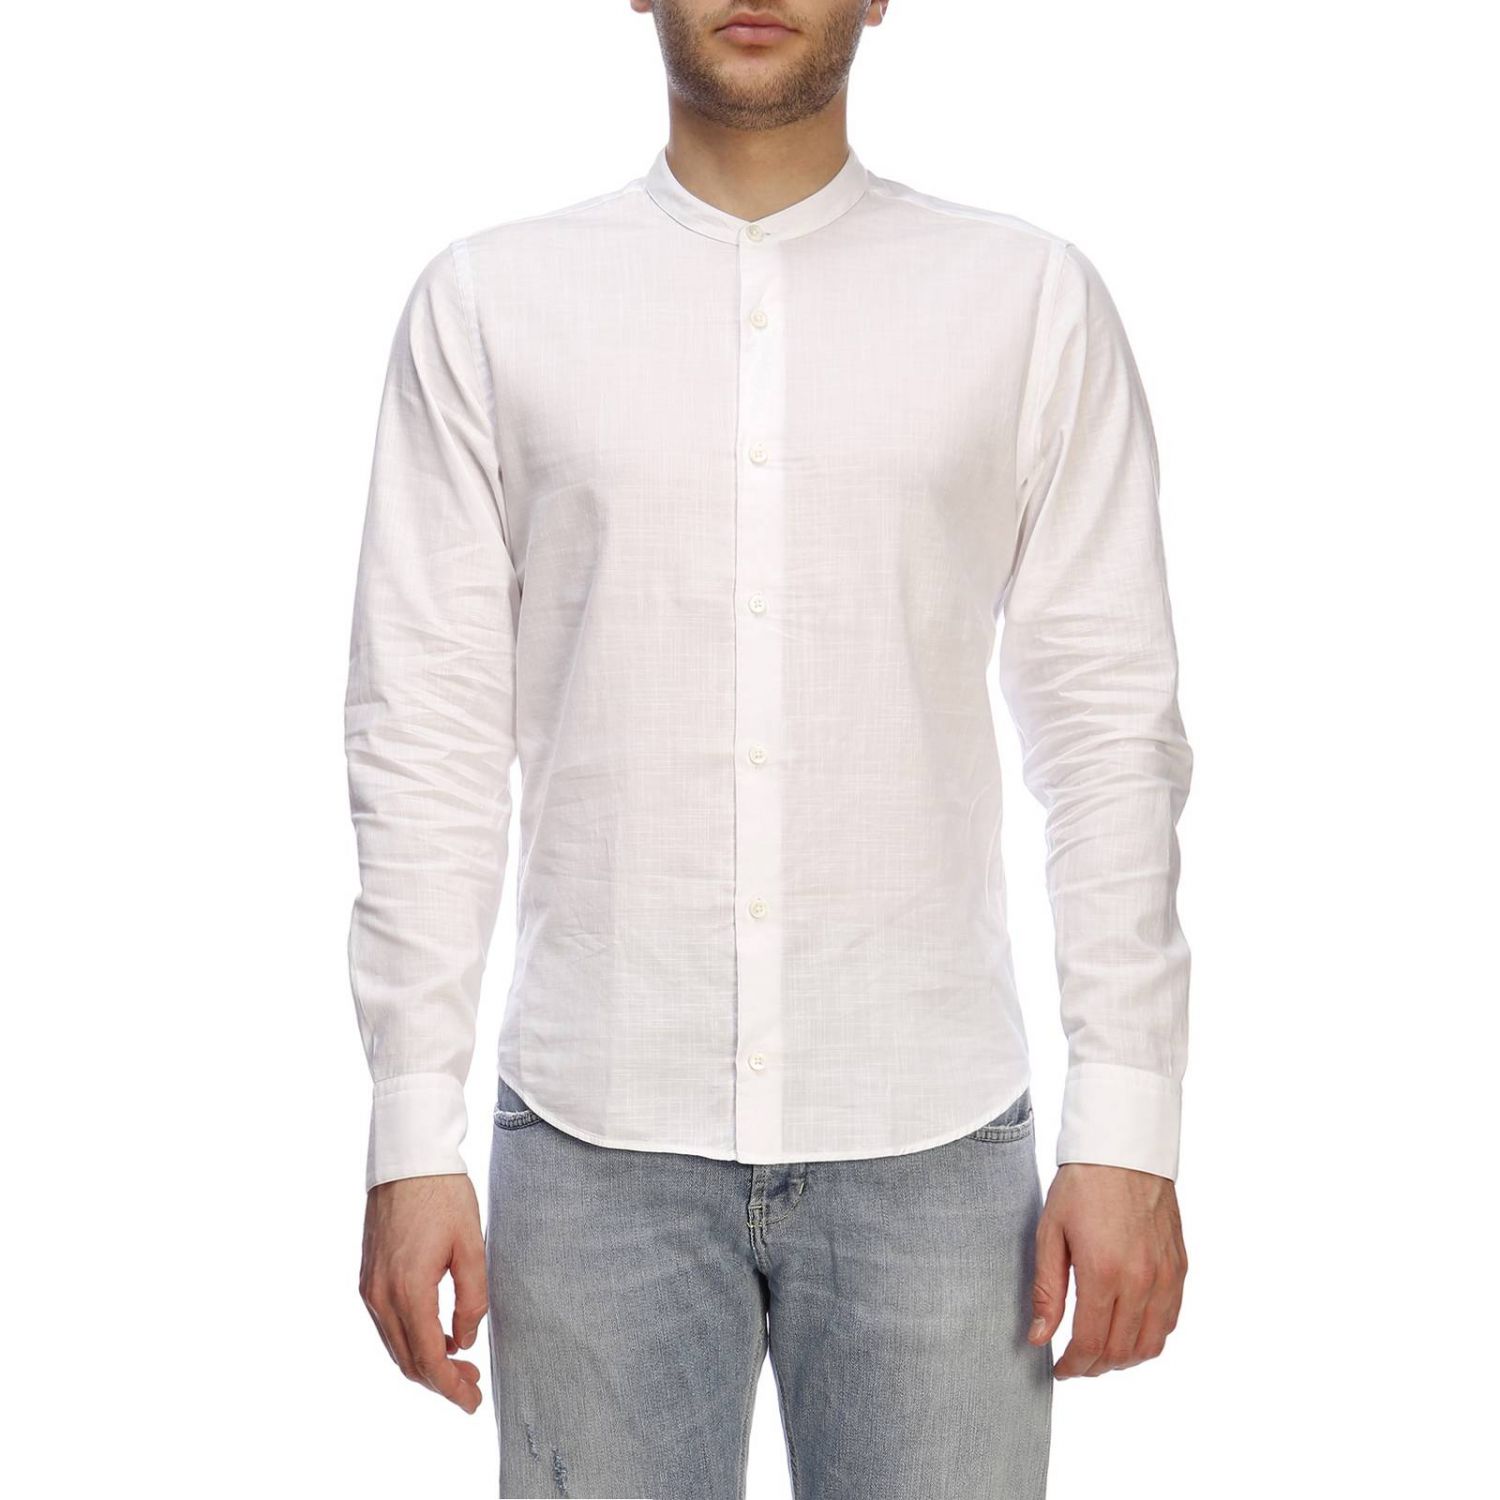 Z Zegna Outlet: shirt for man - White | Z Zegna shirt 9DTWFA 505 online ...